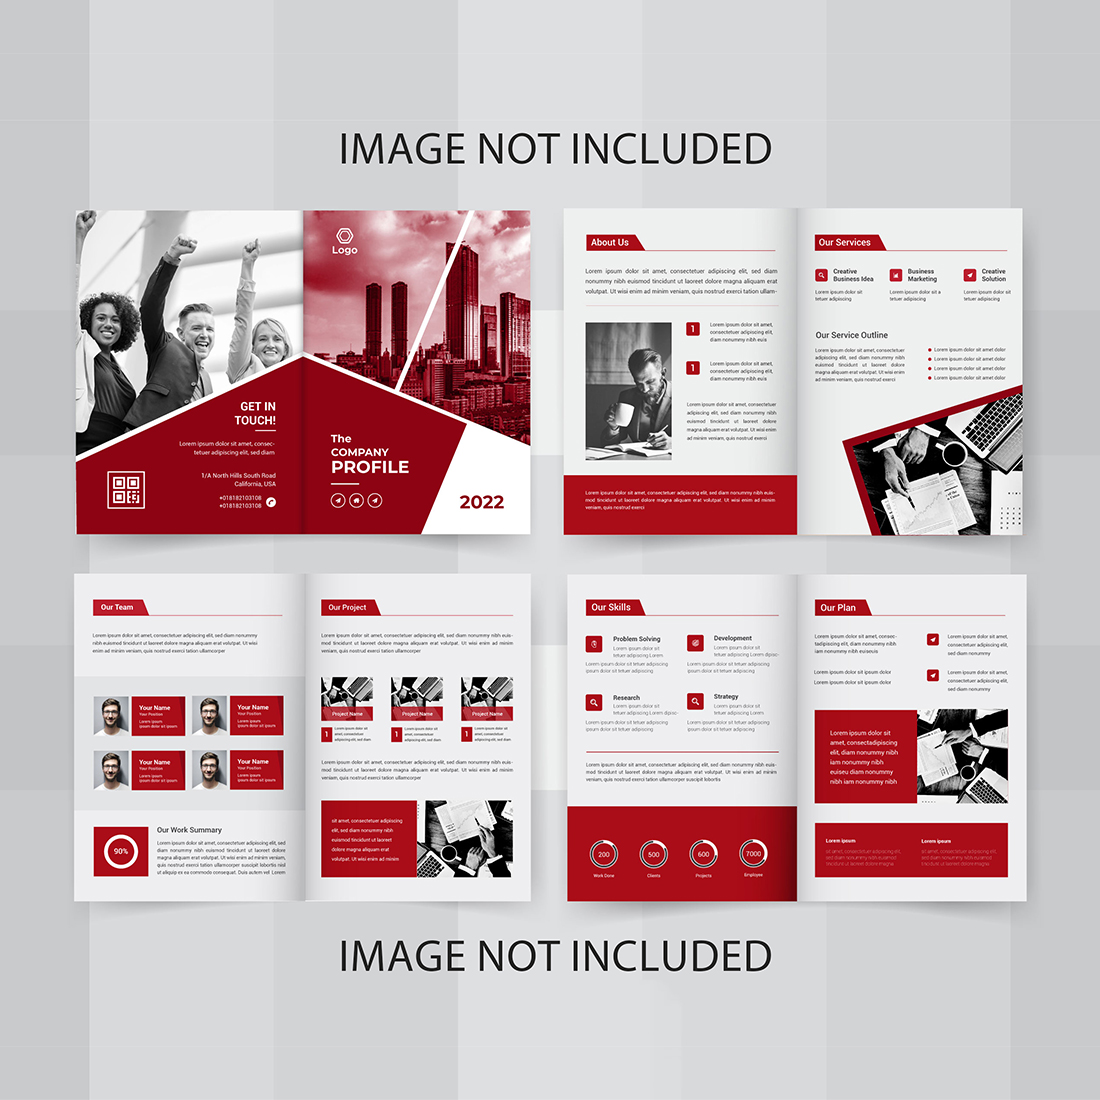 Vector Creative Company Profile Template Design preview image.